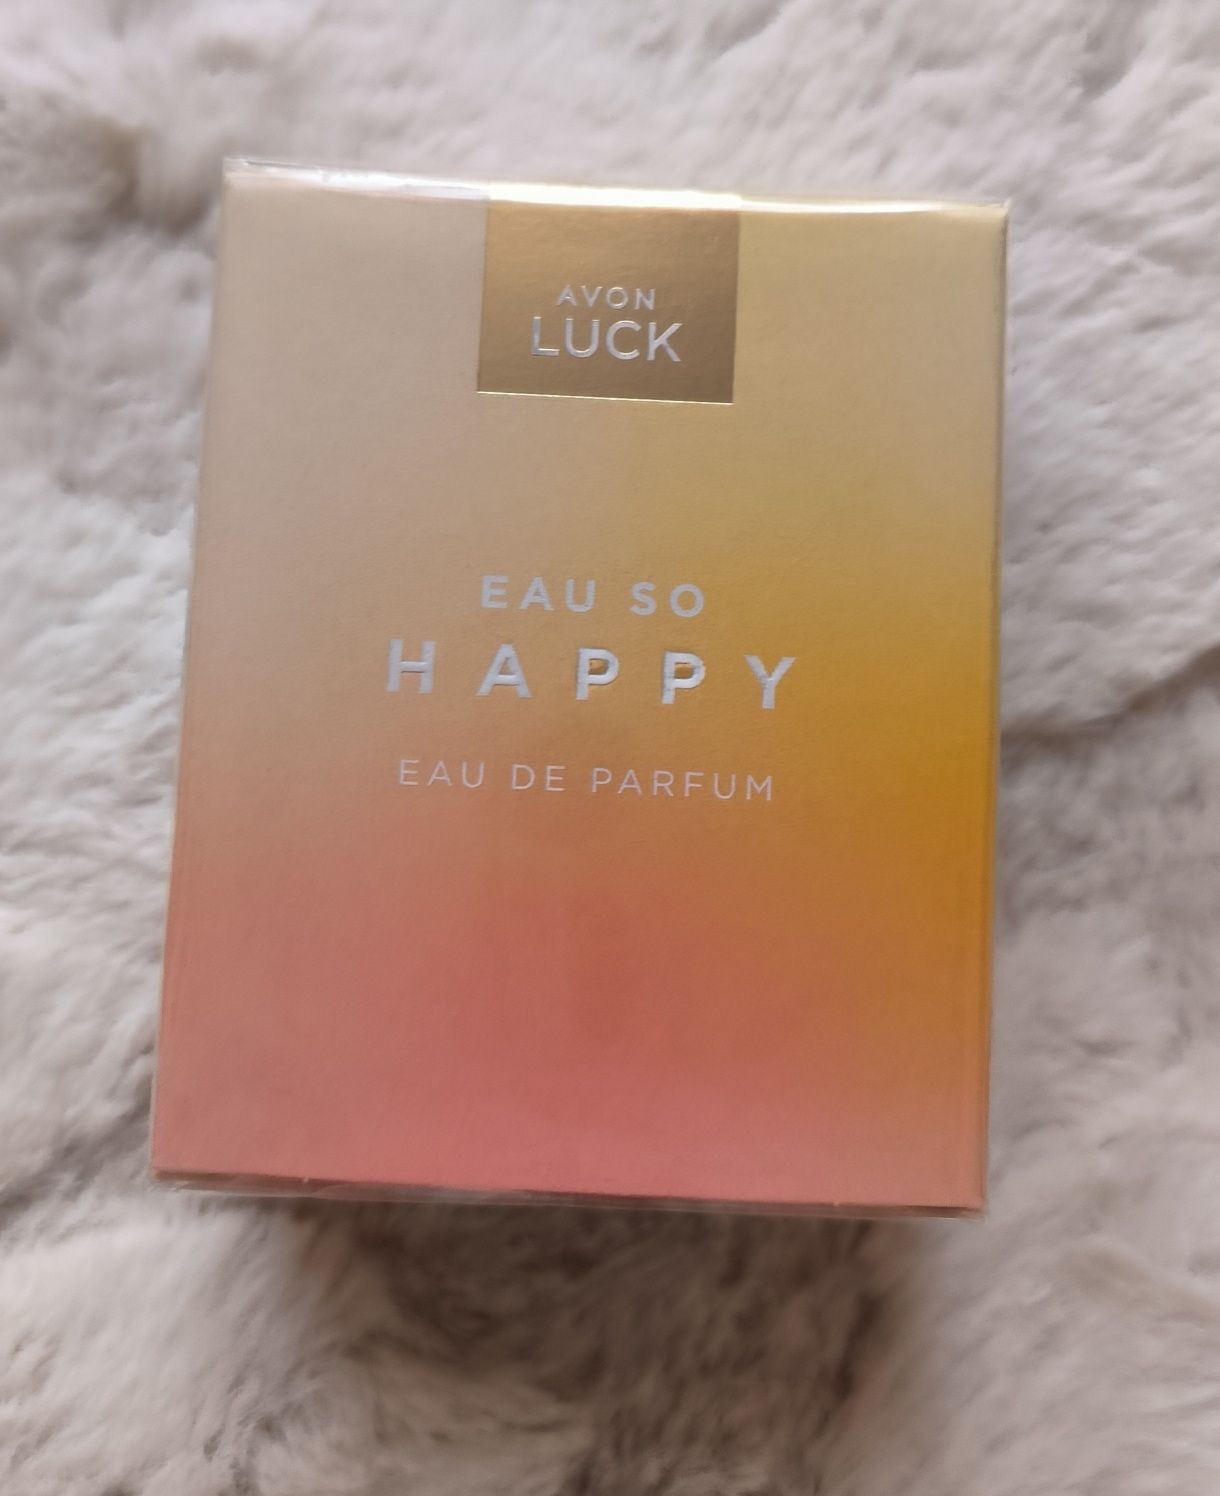 Nowe perfumy Avon damskie Eau So Happy Avon Luck 30ml